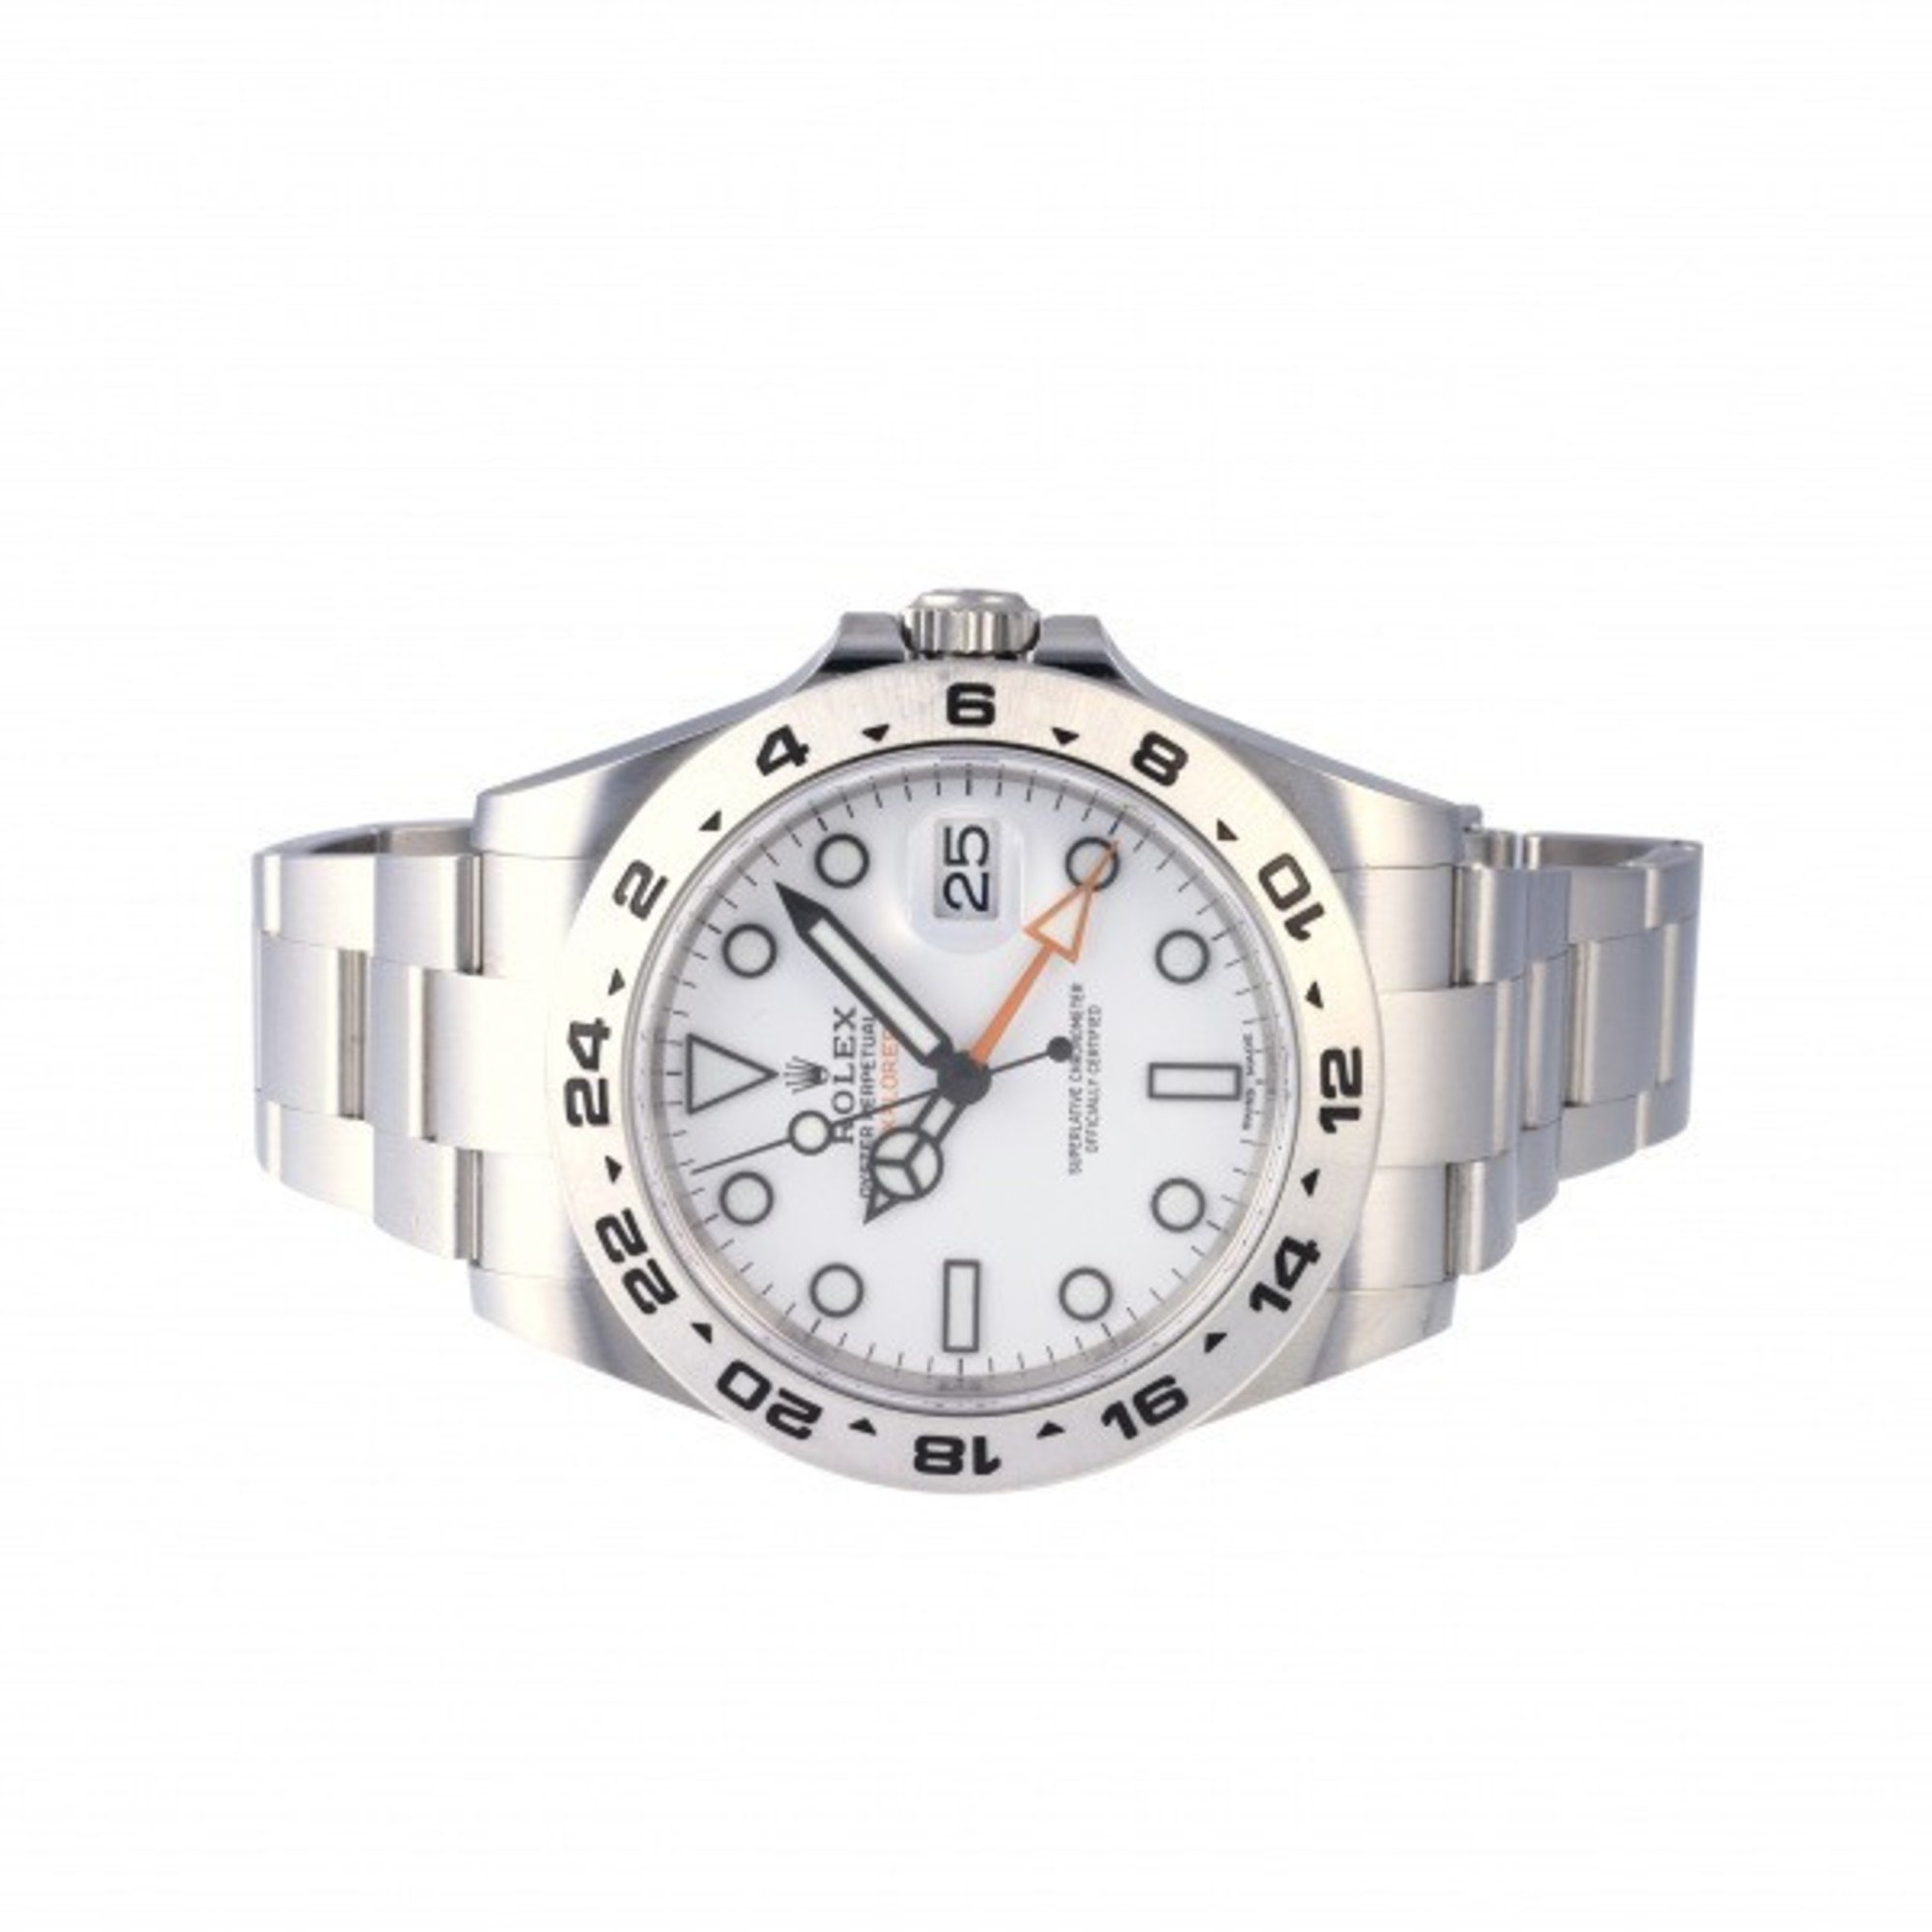 Rolex ROLEX Explorer II 216570 white dial watch men